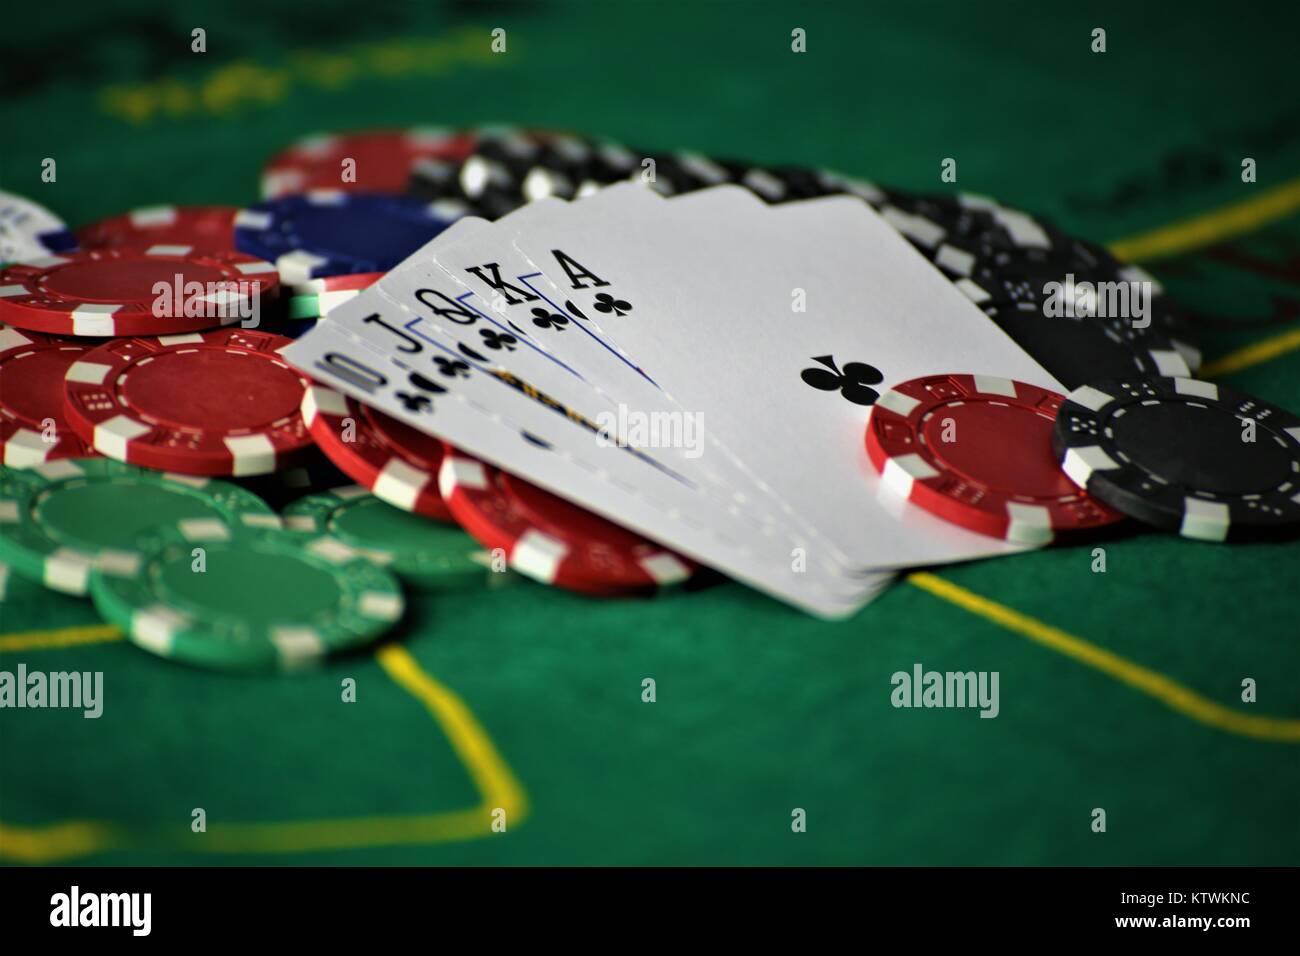 Poker chips on green felt poker table Stock Photo by ©gcpics 4347541